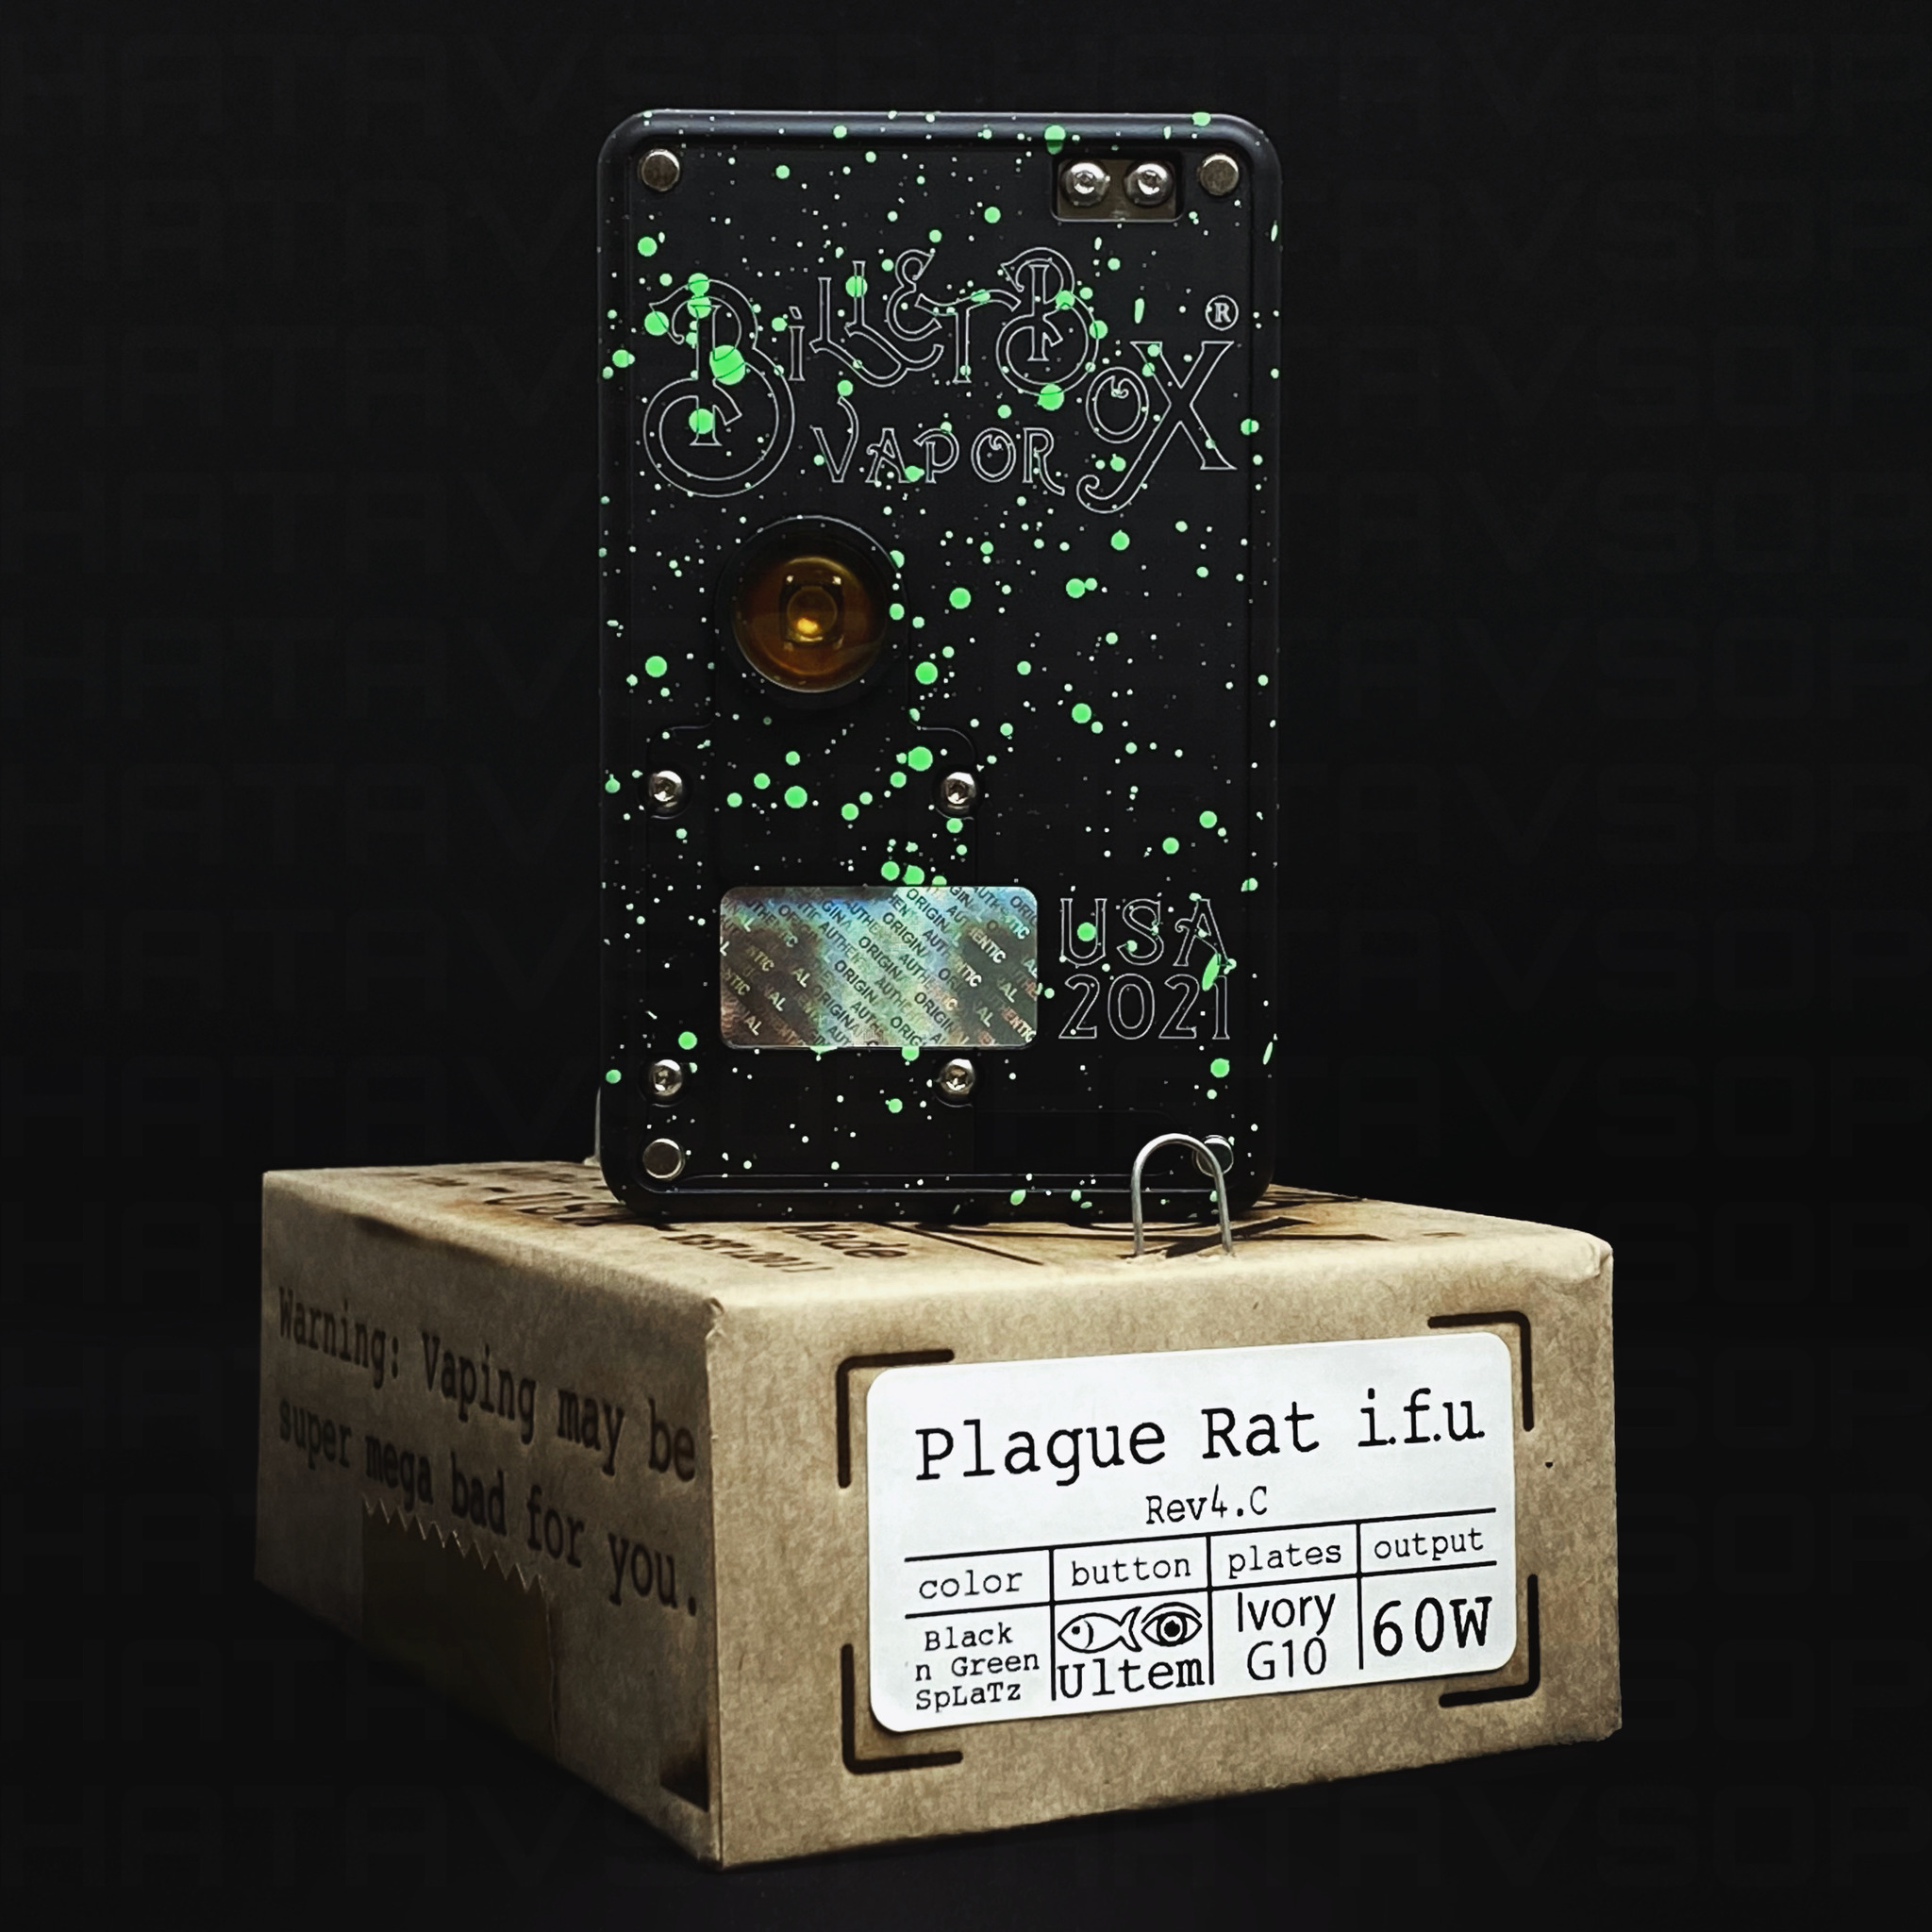 Billet Box Plague Rat i.f.u. by Billet Box Vapor | HATA V.S.O.P.